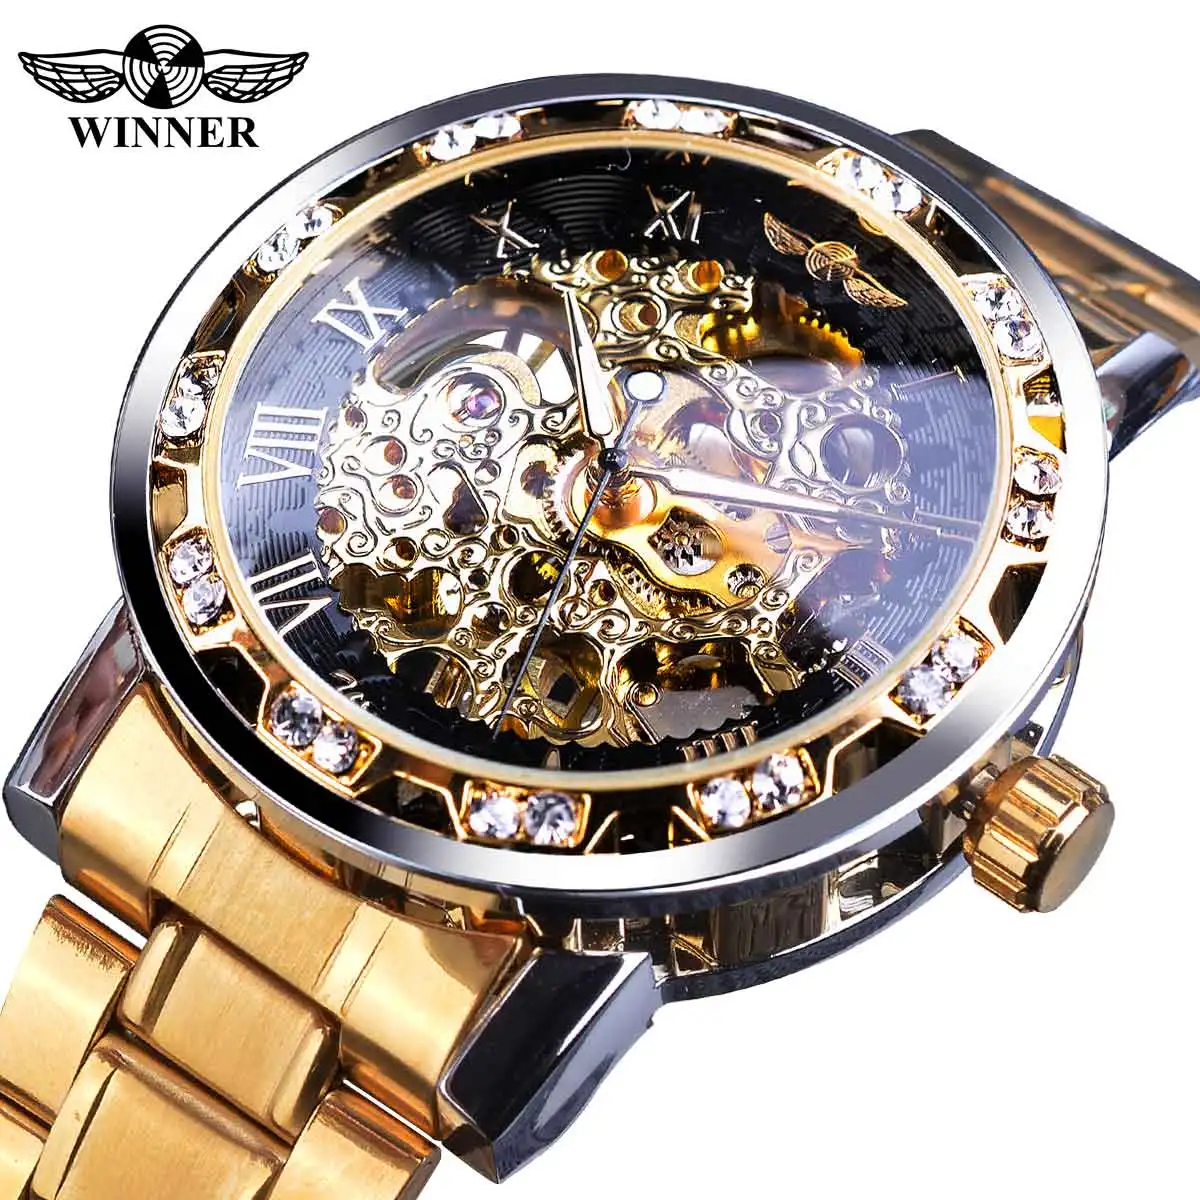 Winner Golden Diamond Mechanical Watches Roman Analog Wristwatch Luxury Male Skeleton Watch Luminous Clock Relogio Masculino integrated motor pump 3 2 wire mechanical analog 4 20ma rs485 piezoelectric vibration sensor acceleration